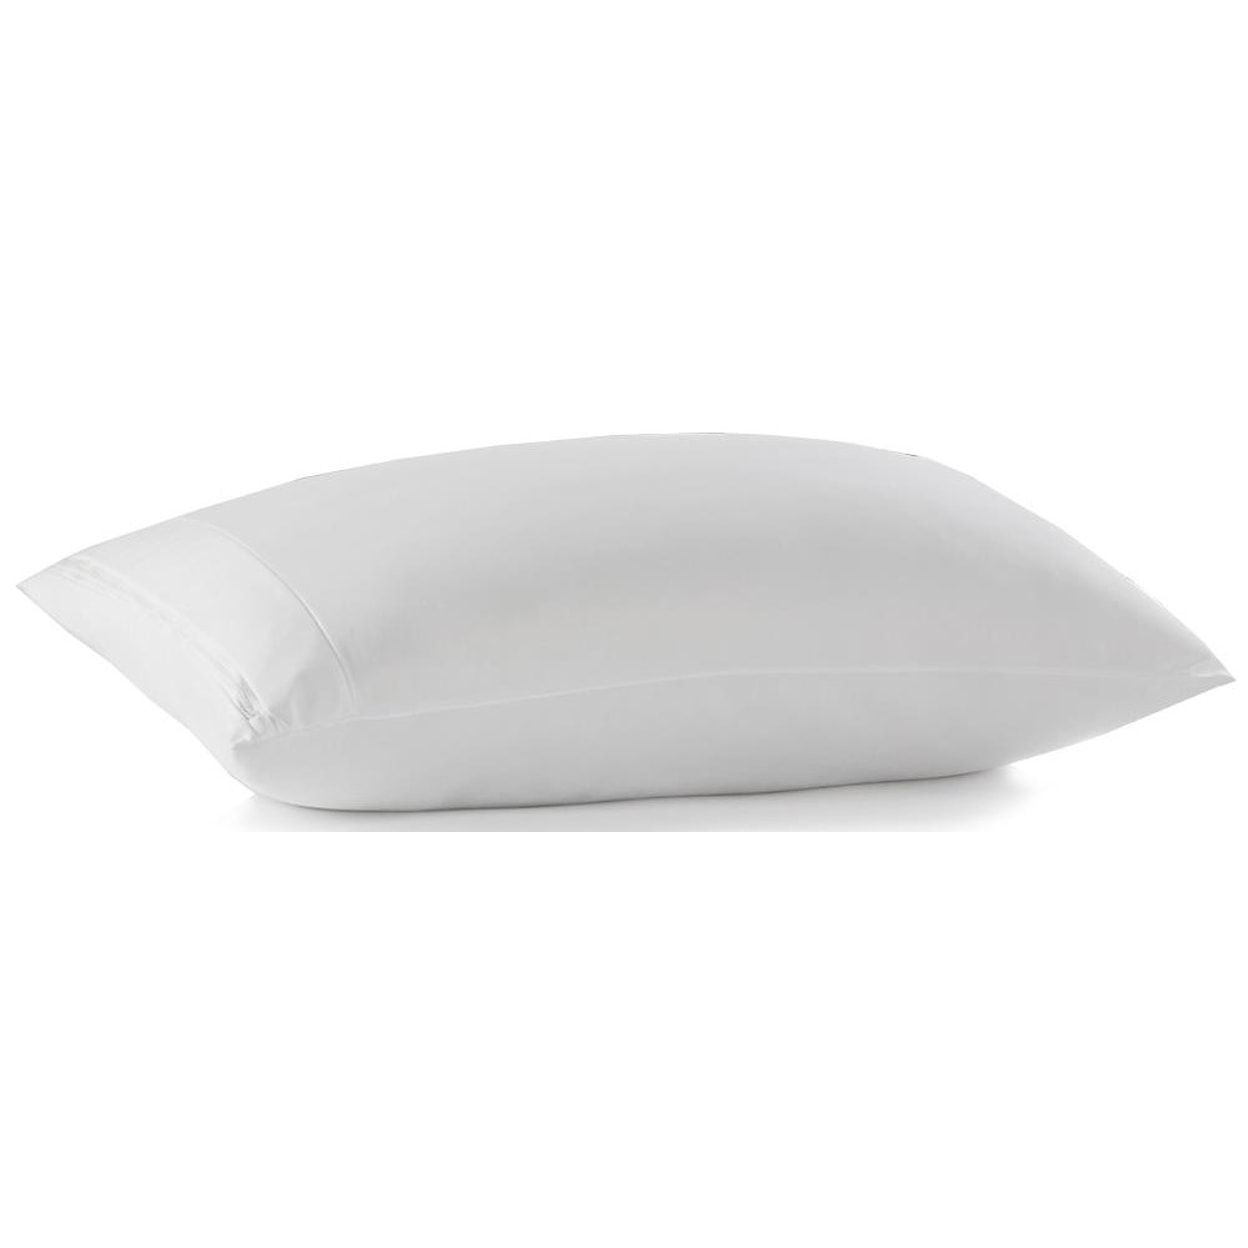 PureCare REVERSA TEMP Pillow Protector